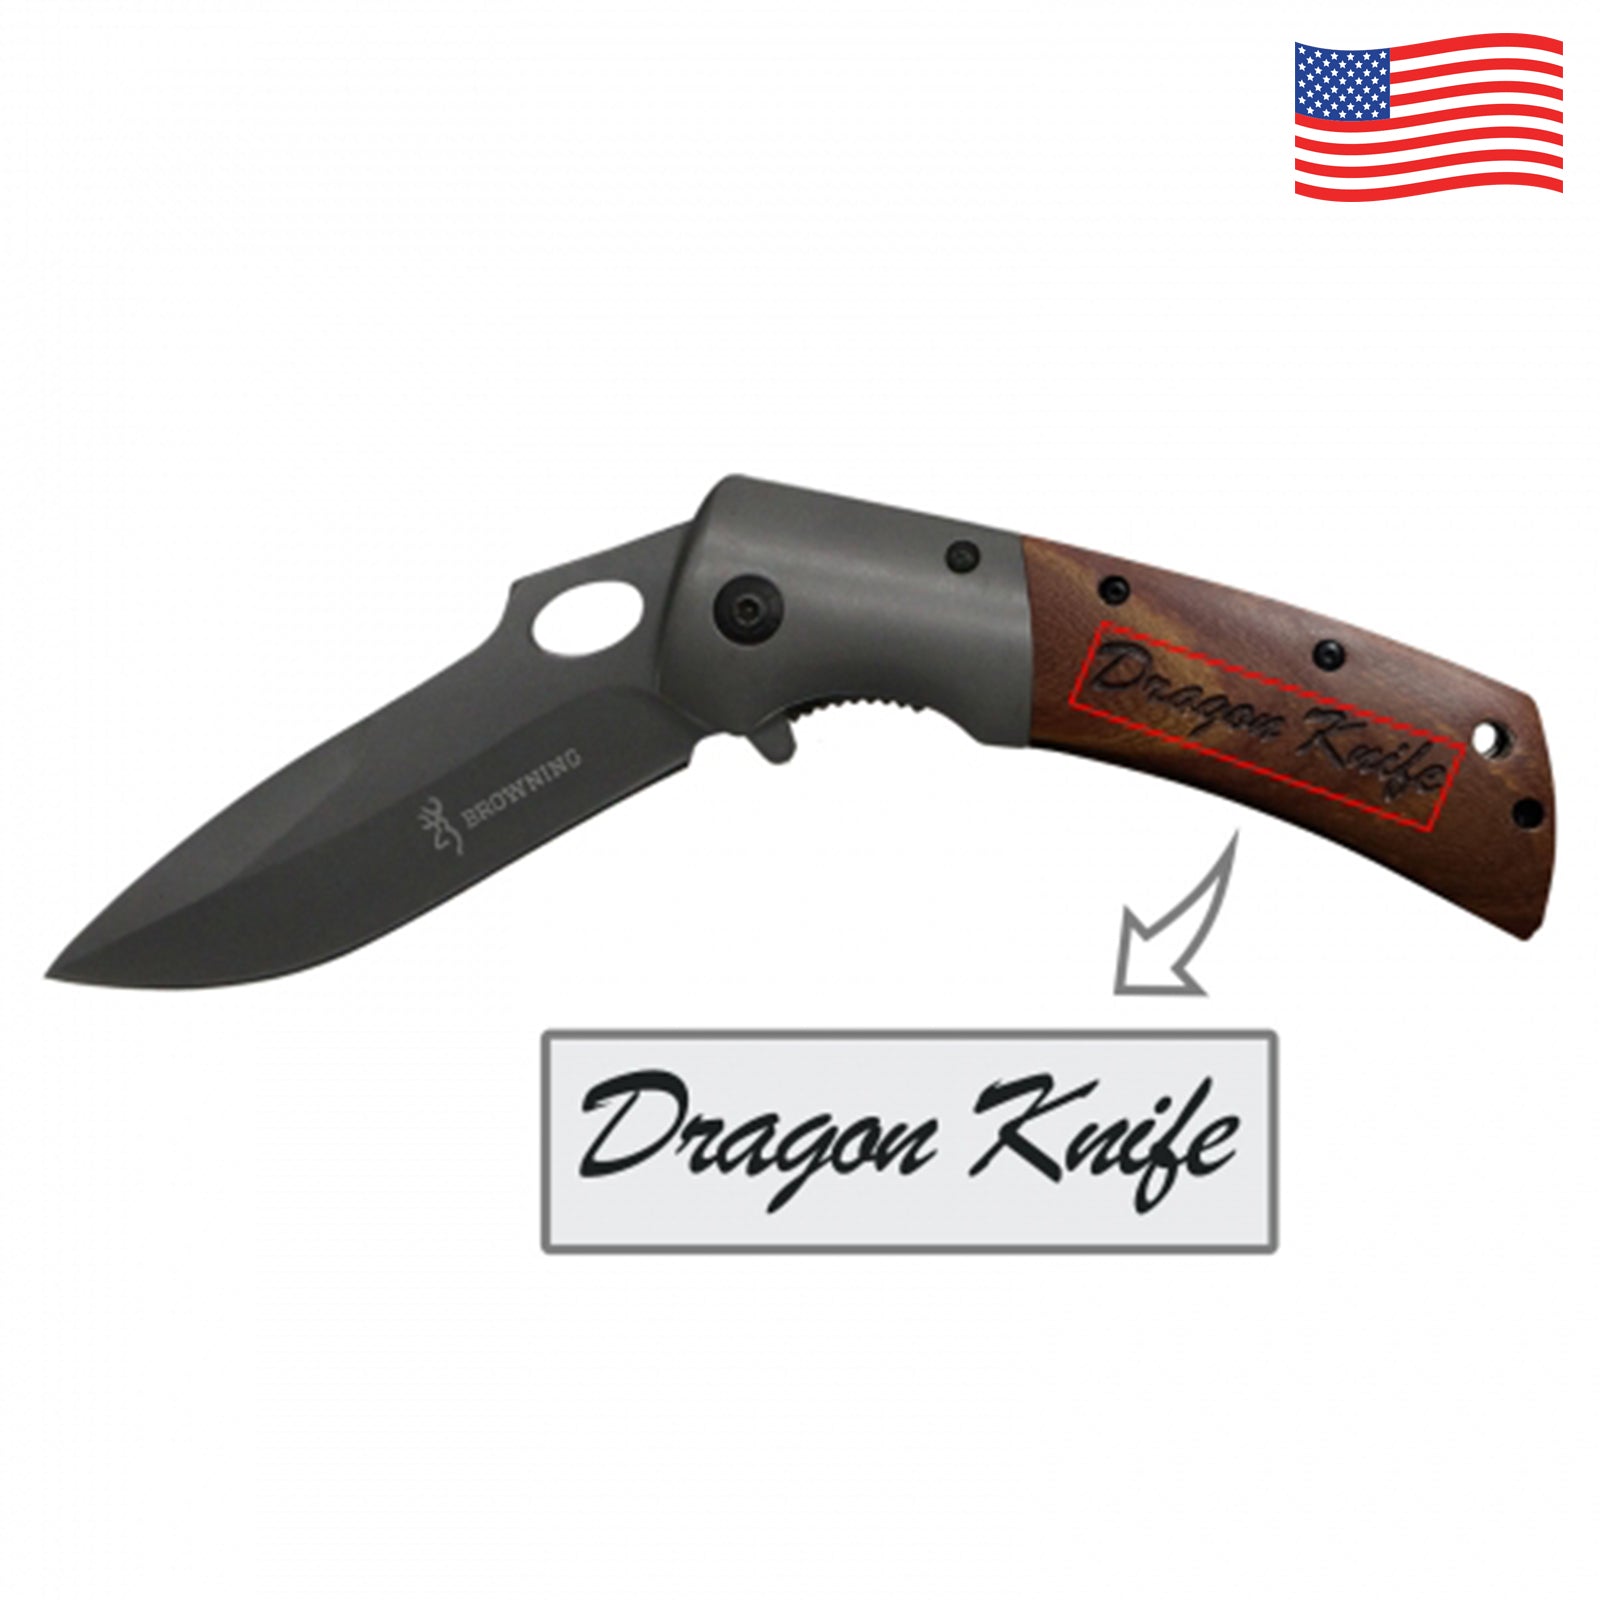 Customizable Browning Folding Knife